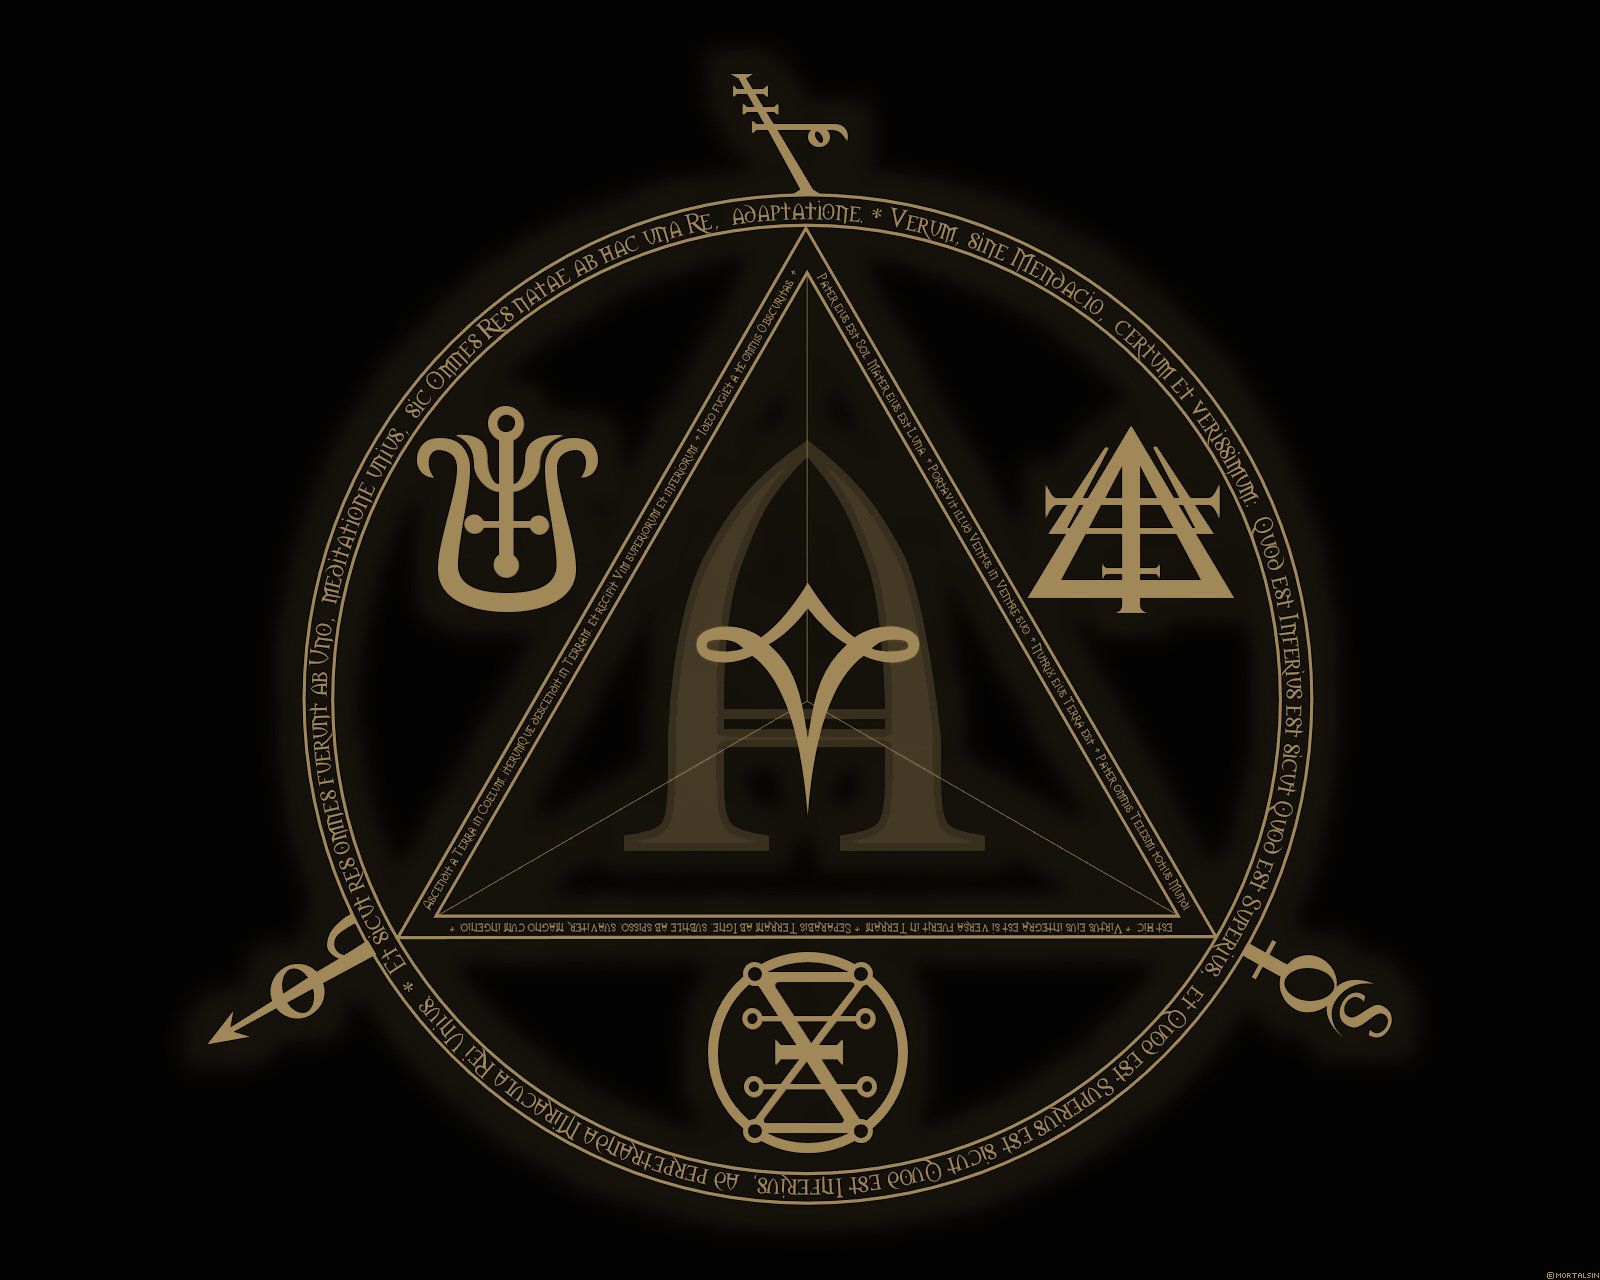 Alchemy Symbols Wallpapers